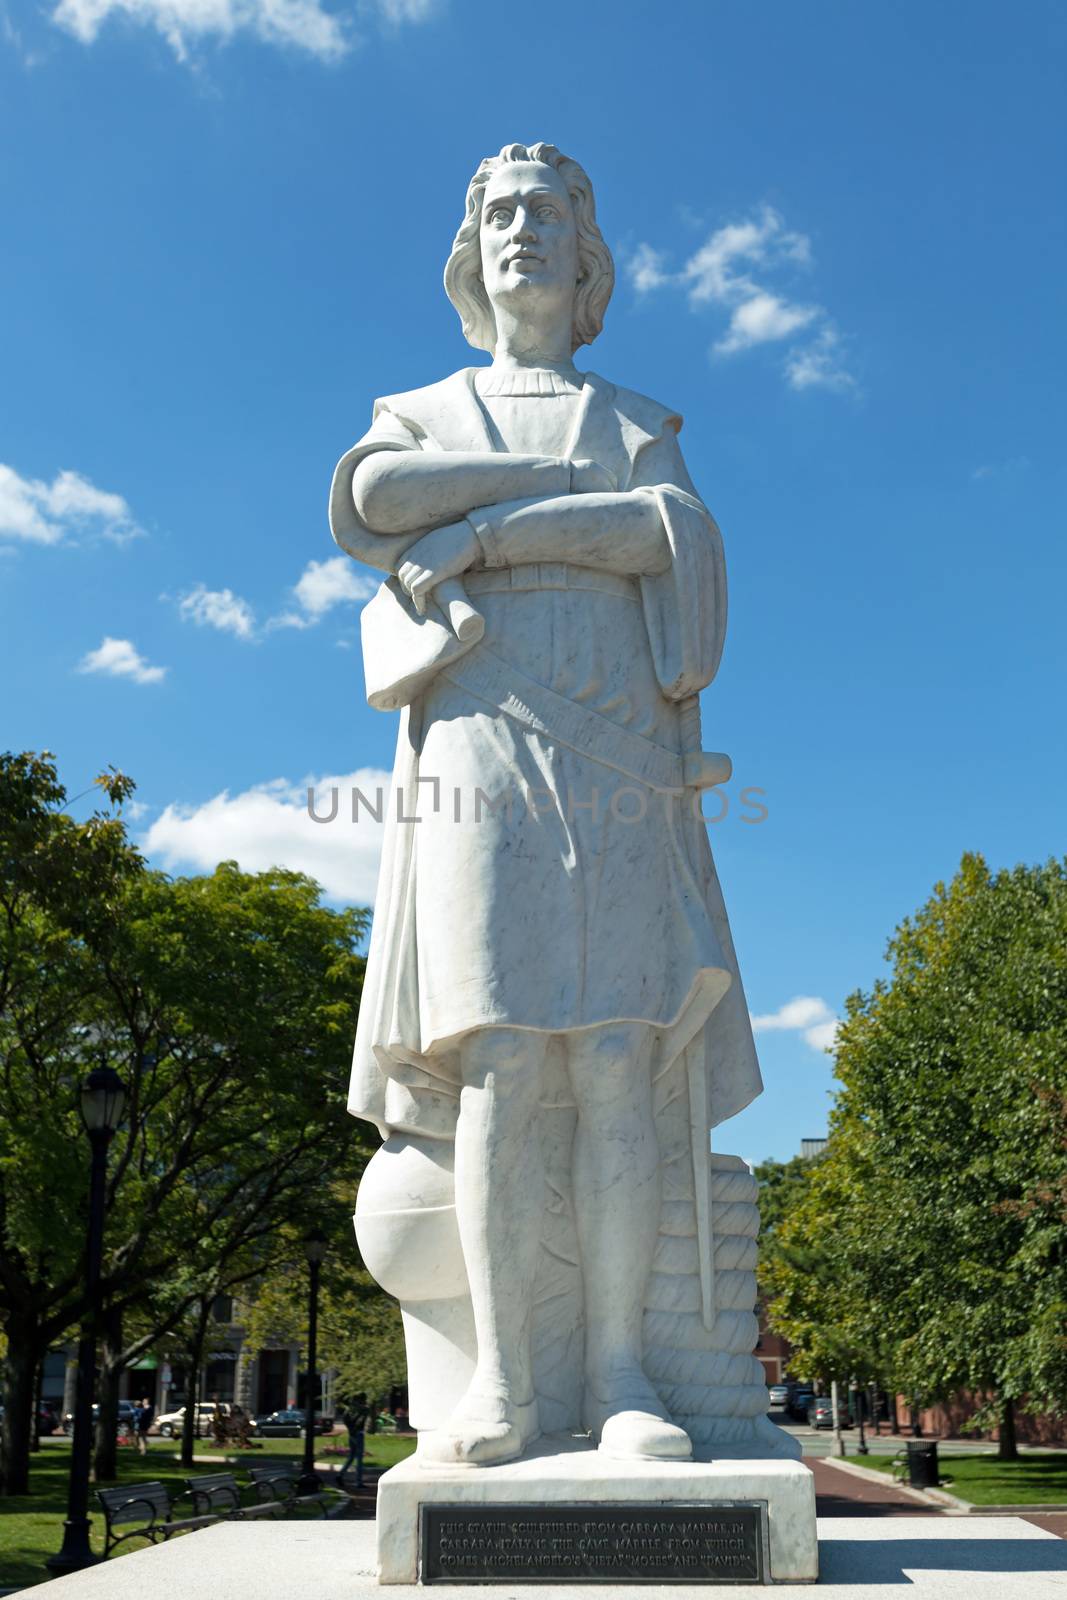 Boston Christopher Colombus public statue found in the park.